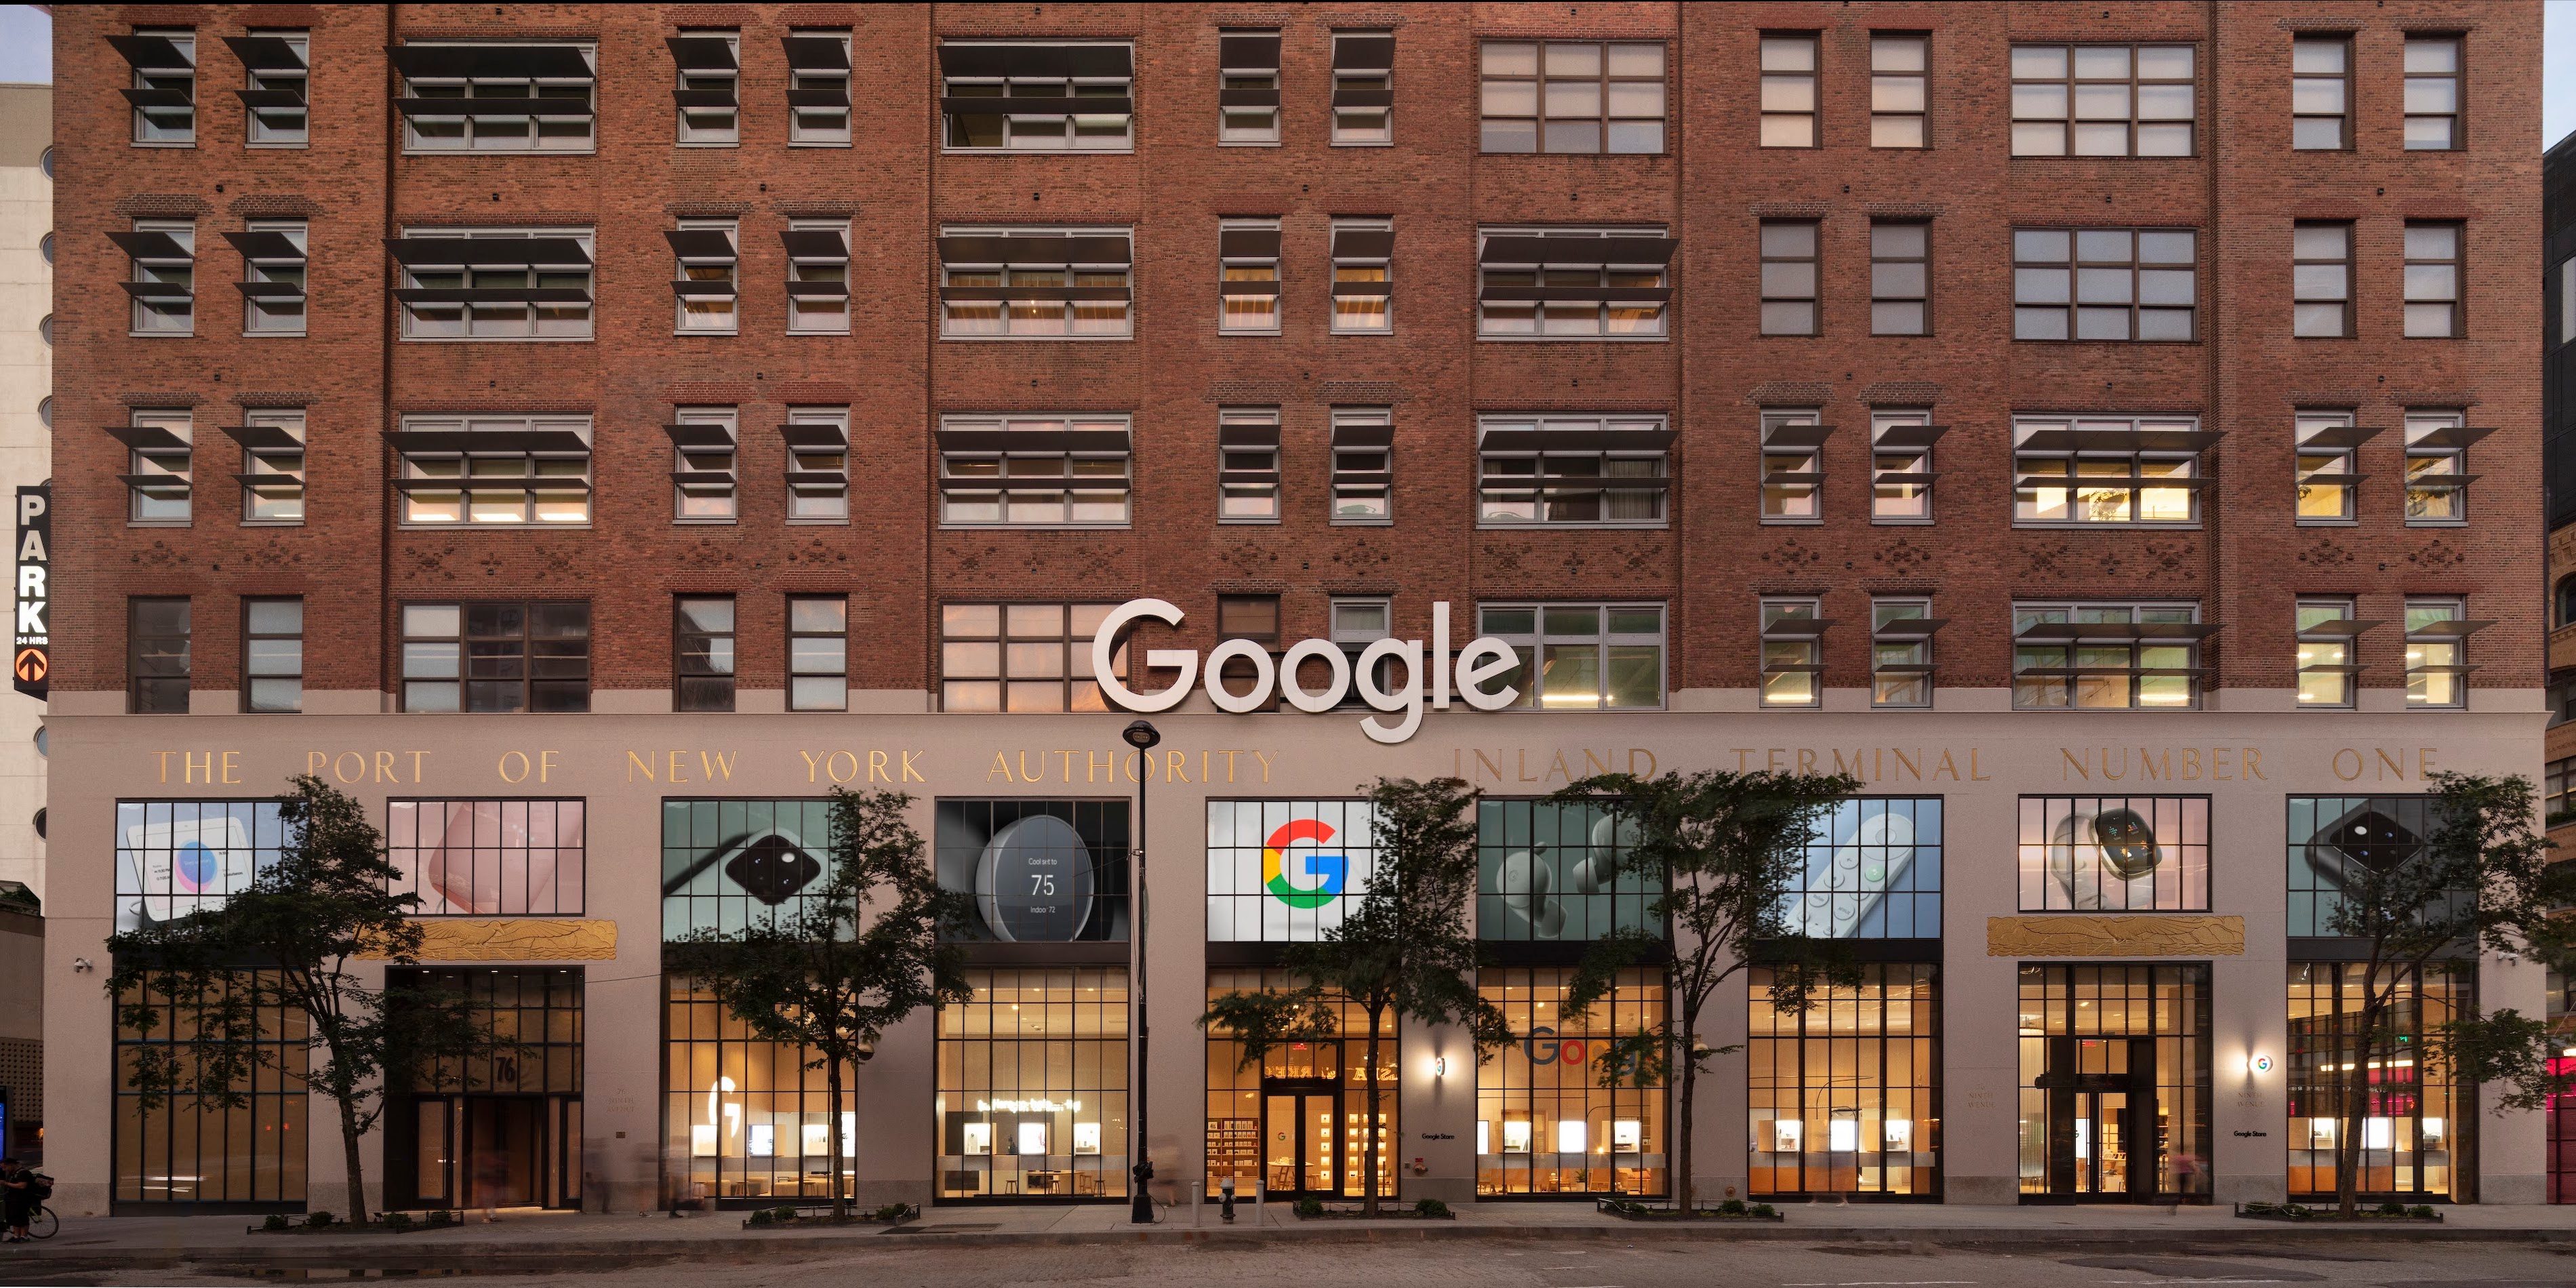 Google-Store-Chelsea-cover-3.jpeg